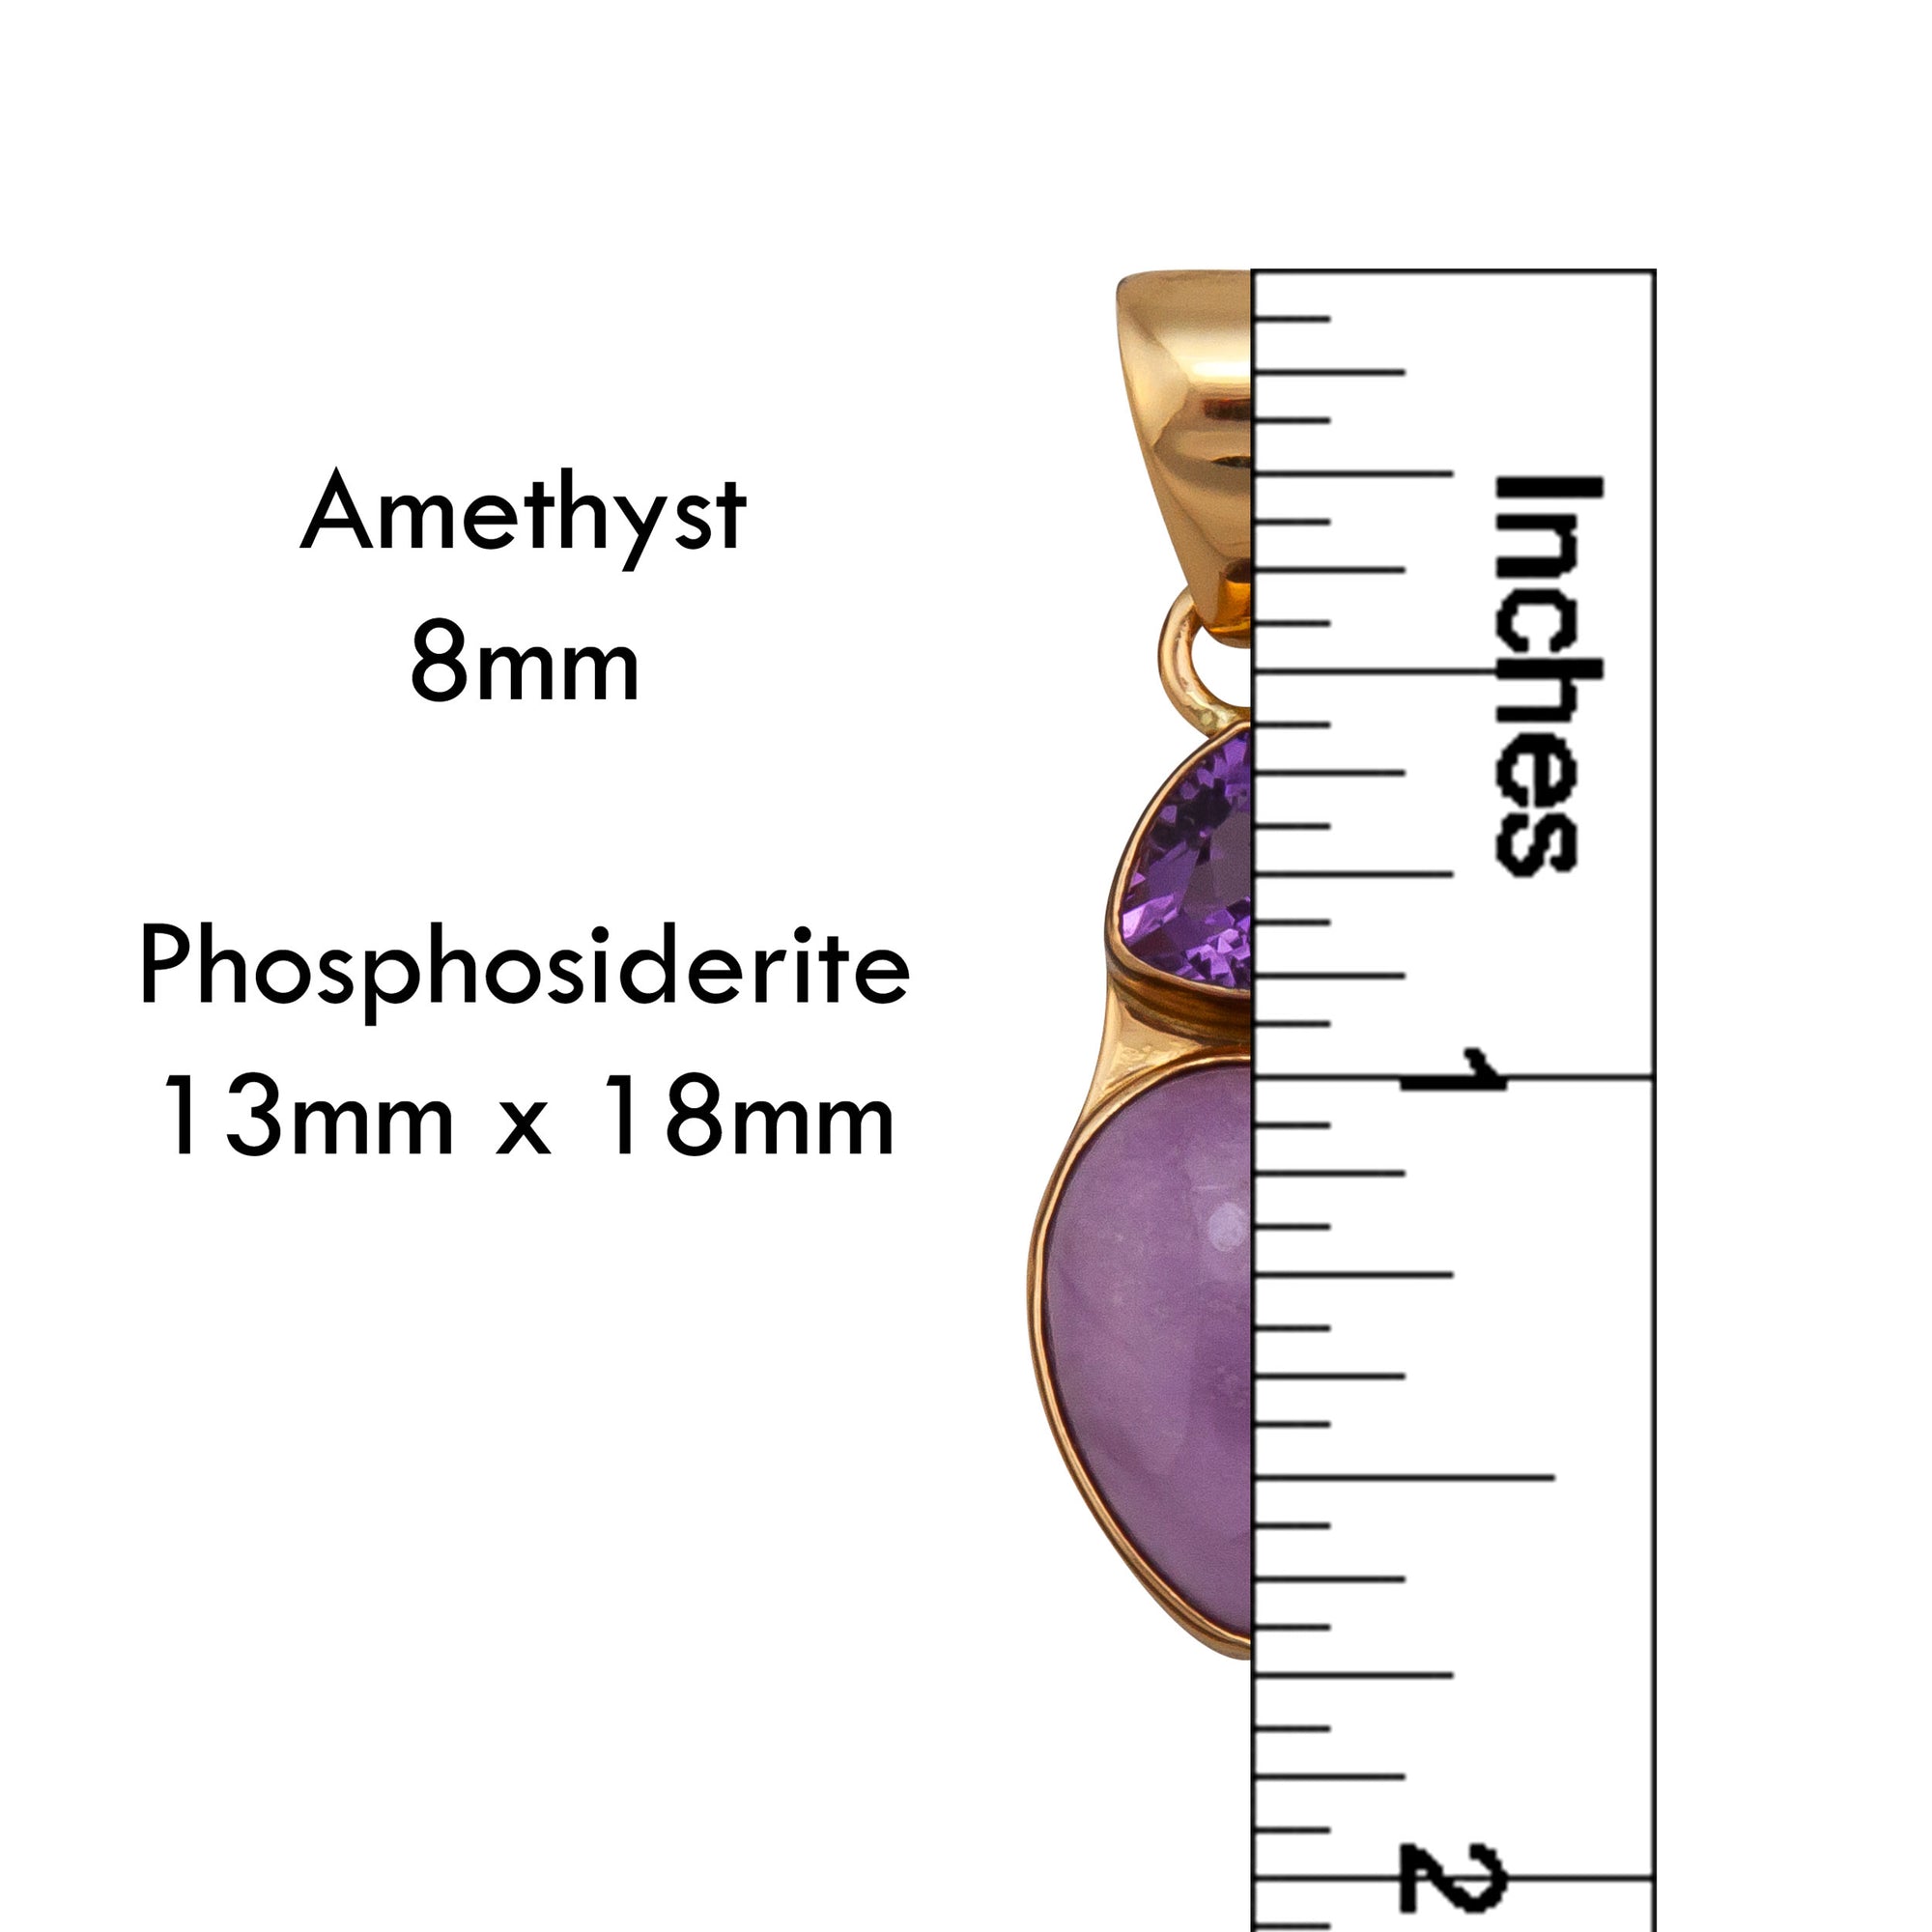 Charles Albert Jewelry - Alchemia Amethyst and Phosphosiderite Pendant - Measurements